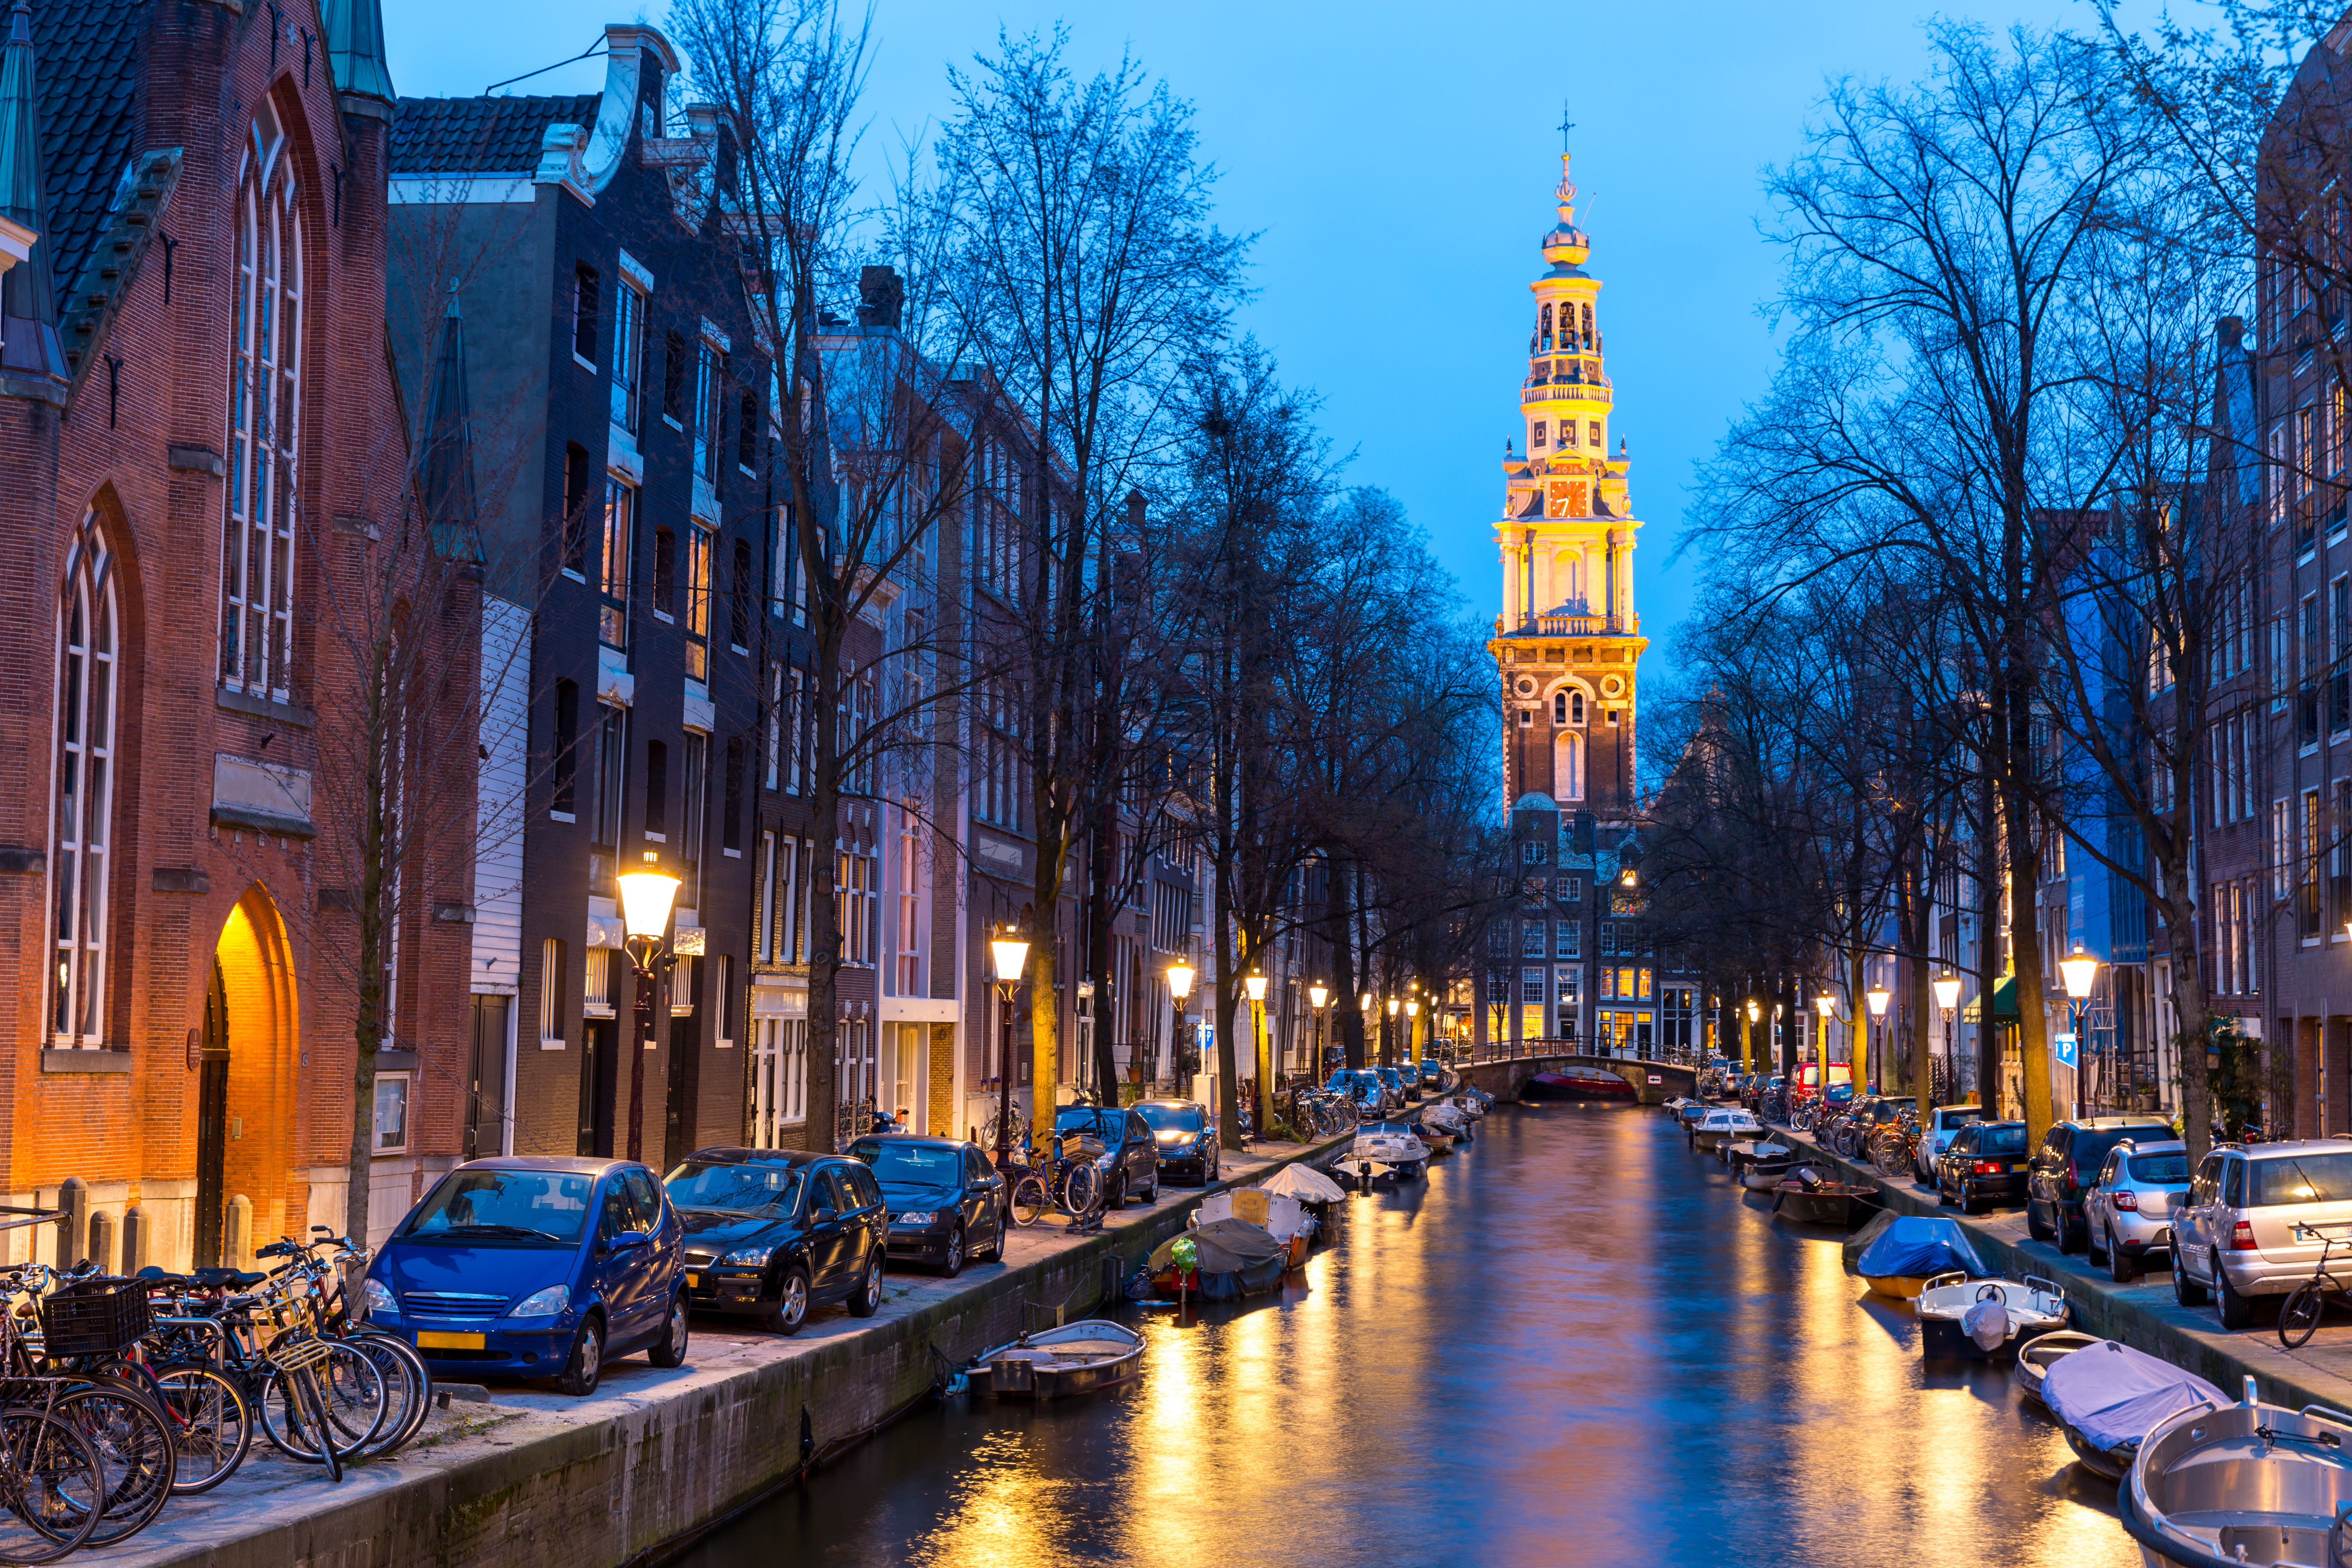 Fondos de Pantalla Canal de Amsterdam al Atardecer, Zuiderkerk,  Keizersgracht, Groenburgwal, Herengracht, Imágenes y Fotos Gratis